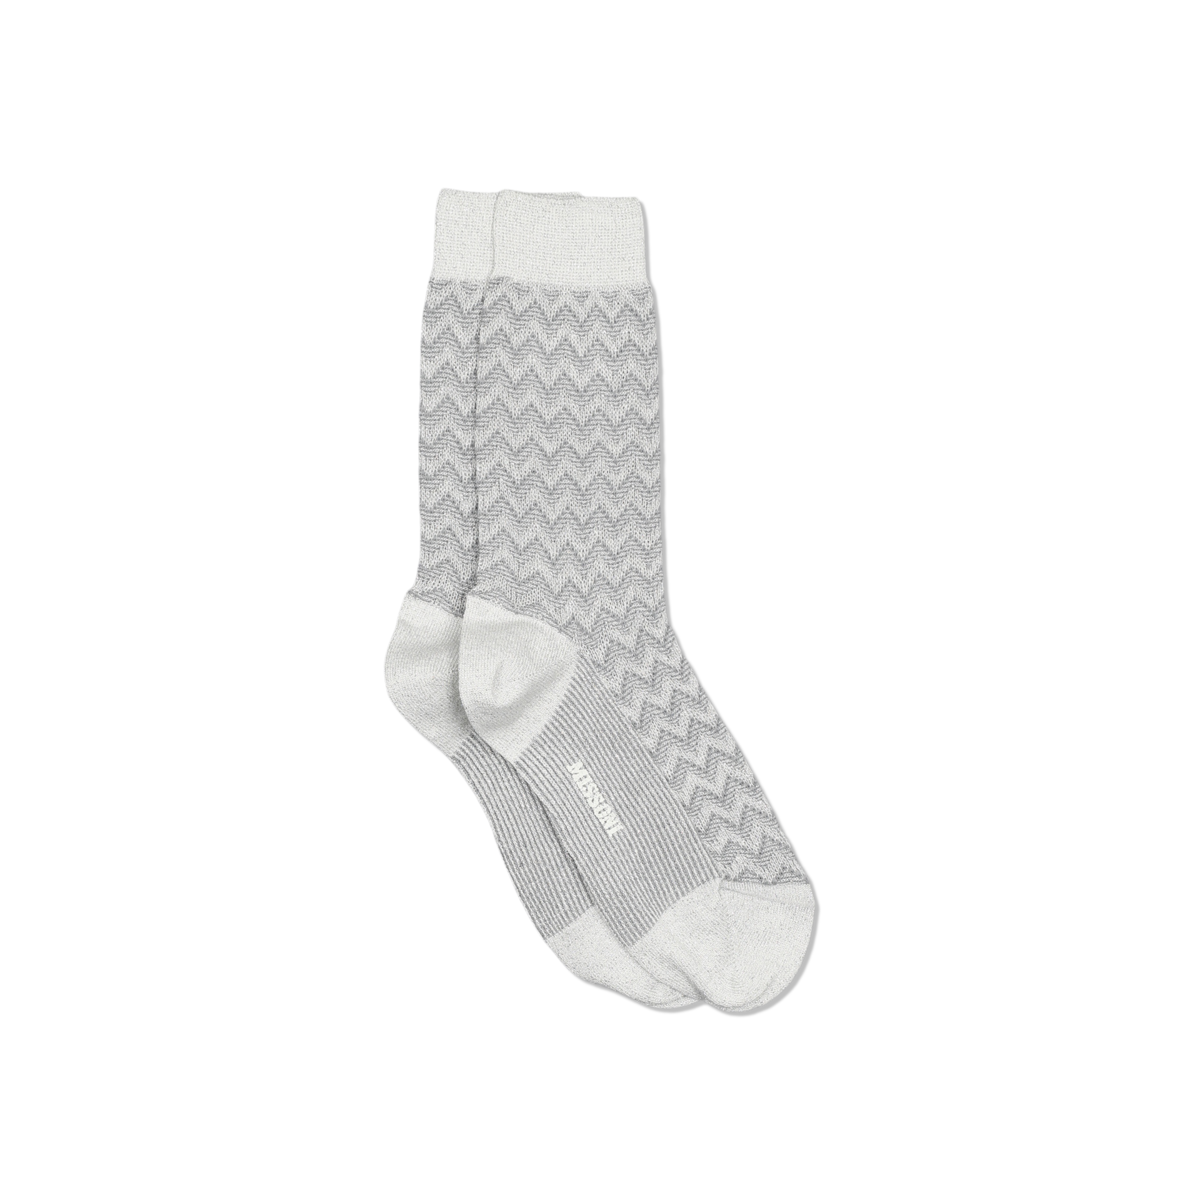 Middle Socks